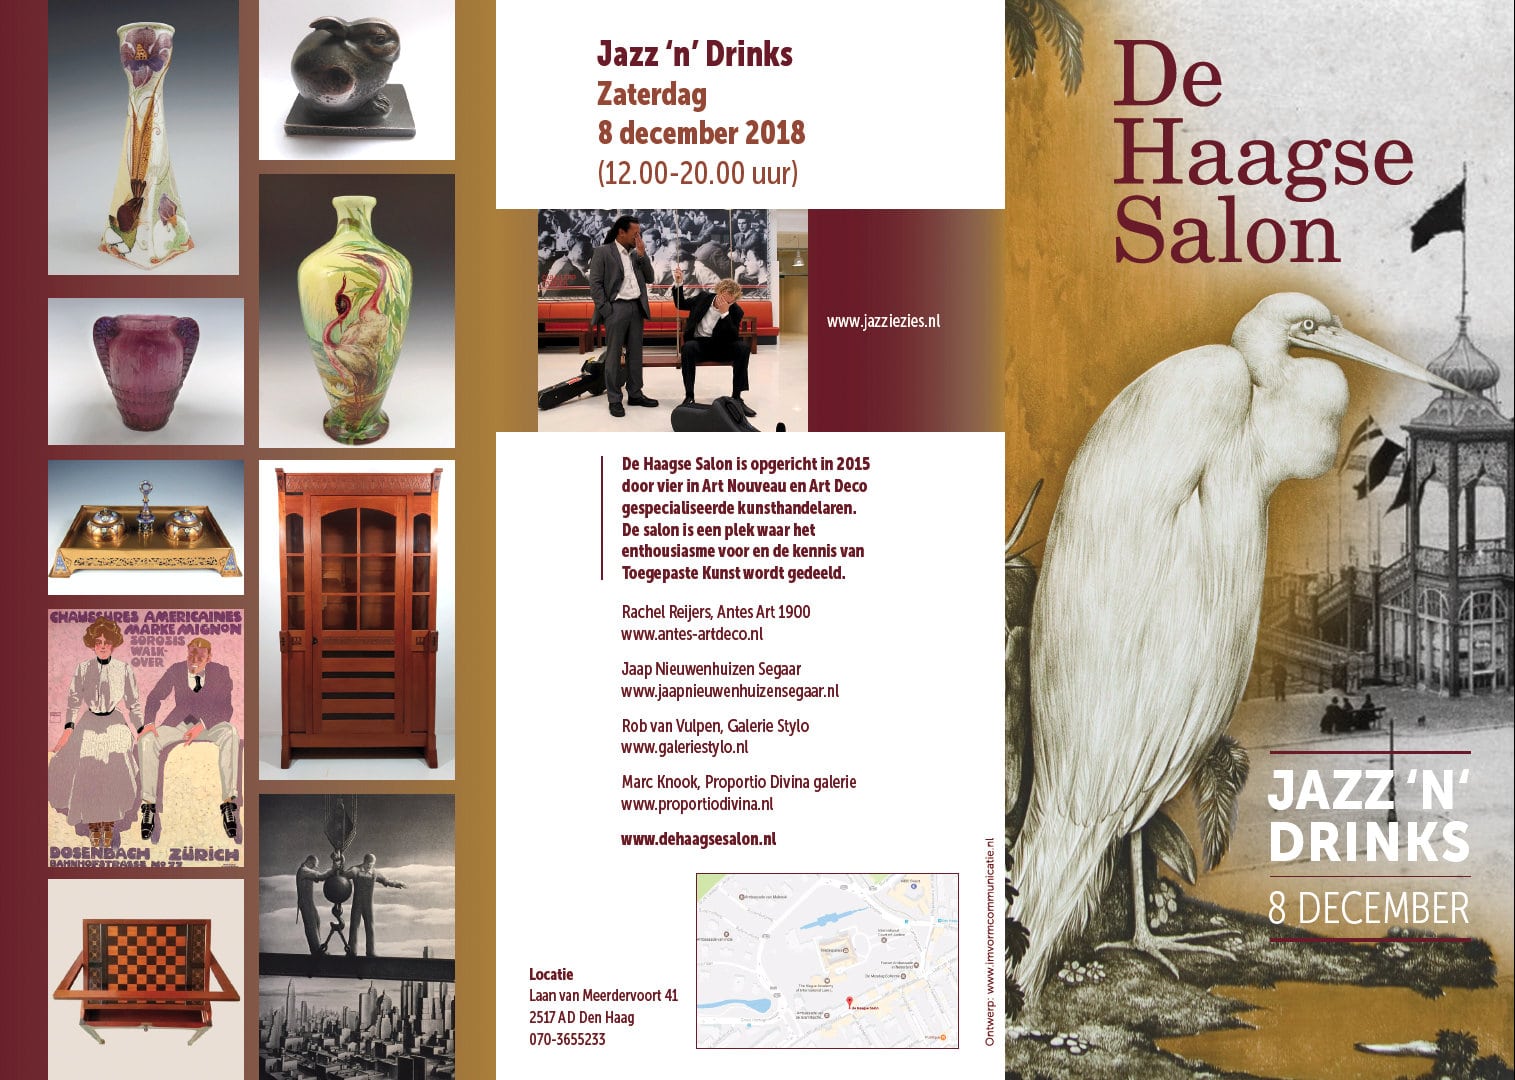 Jazz n Drinks buitenkant - The Hague Salon Jazz 'N Drinks, zaterdag 8 december!